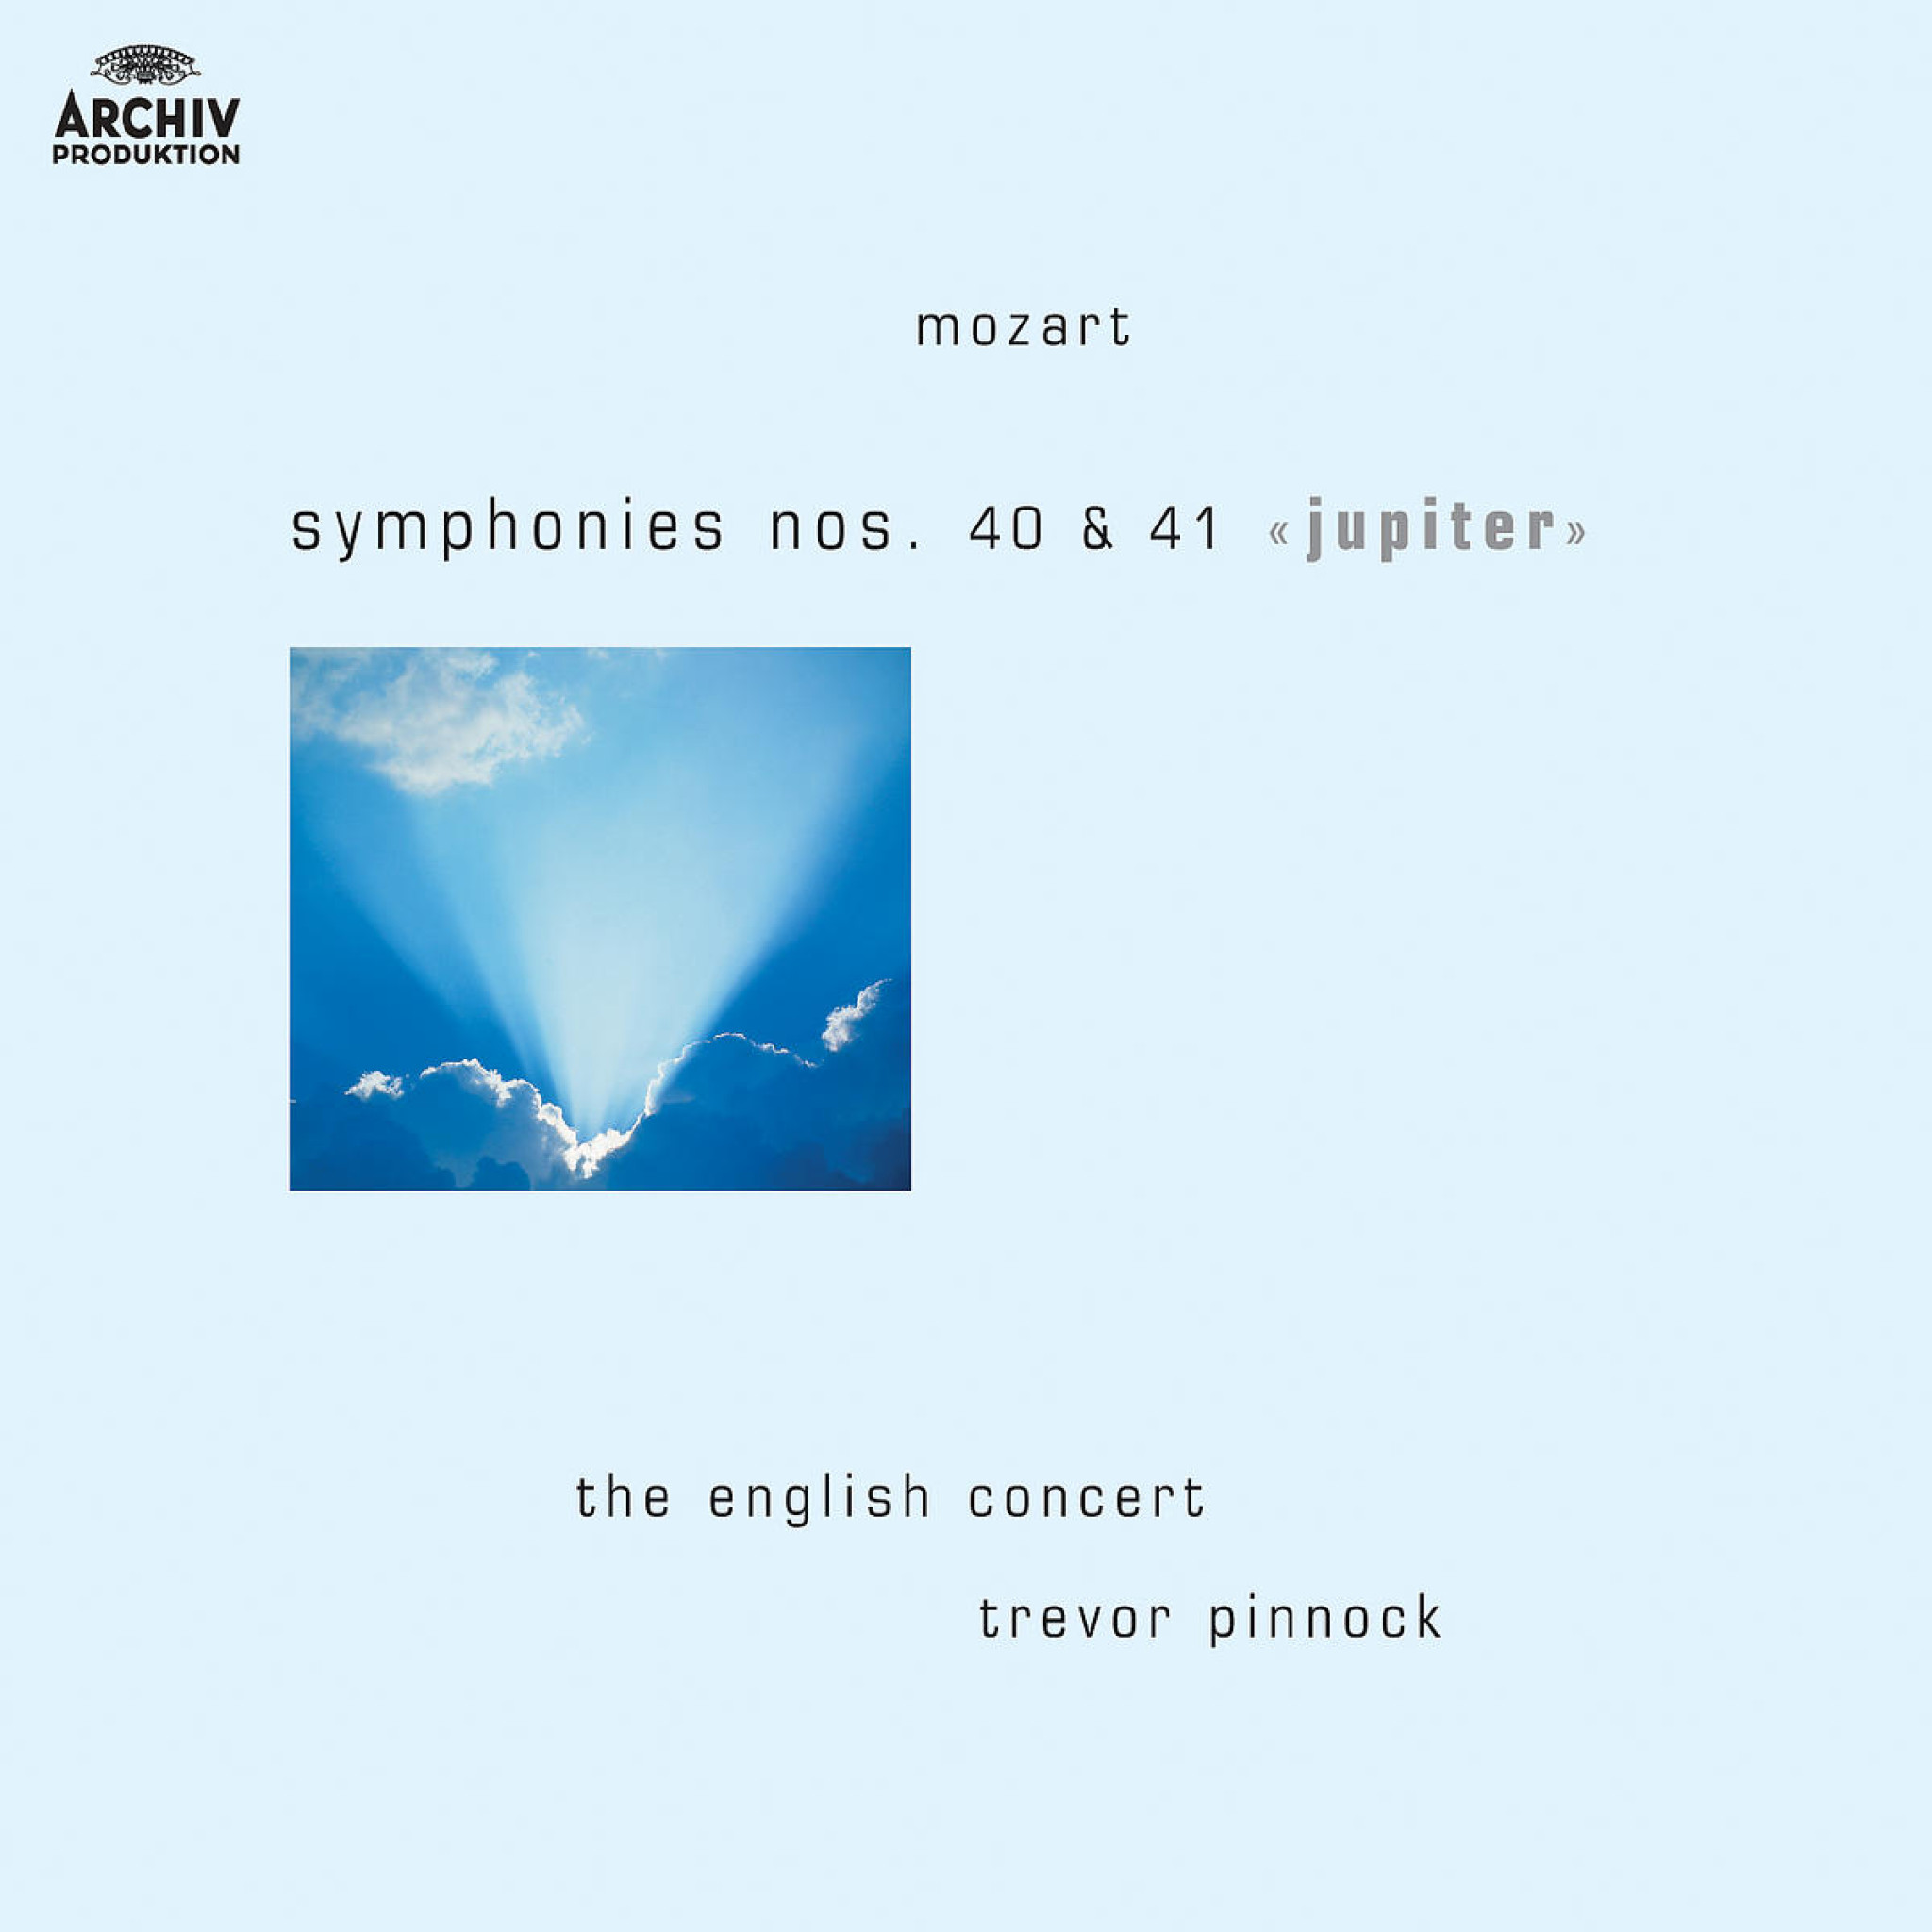 Mozart: Symphonies Nos.40 & 41 "Jupiter" 0028947422927